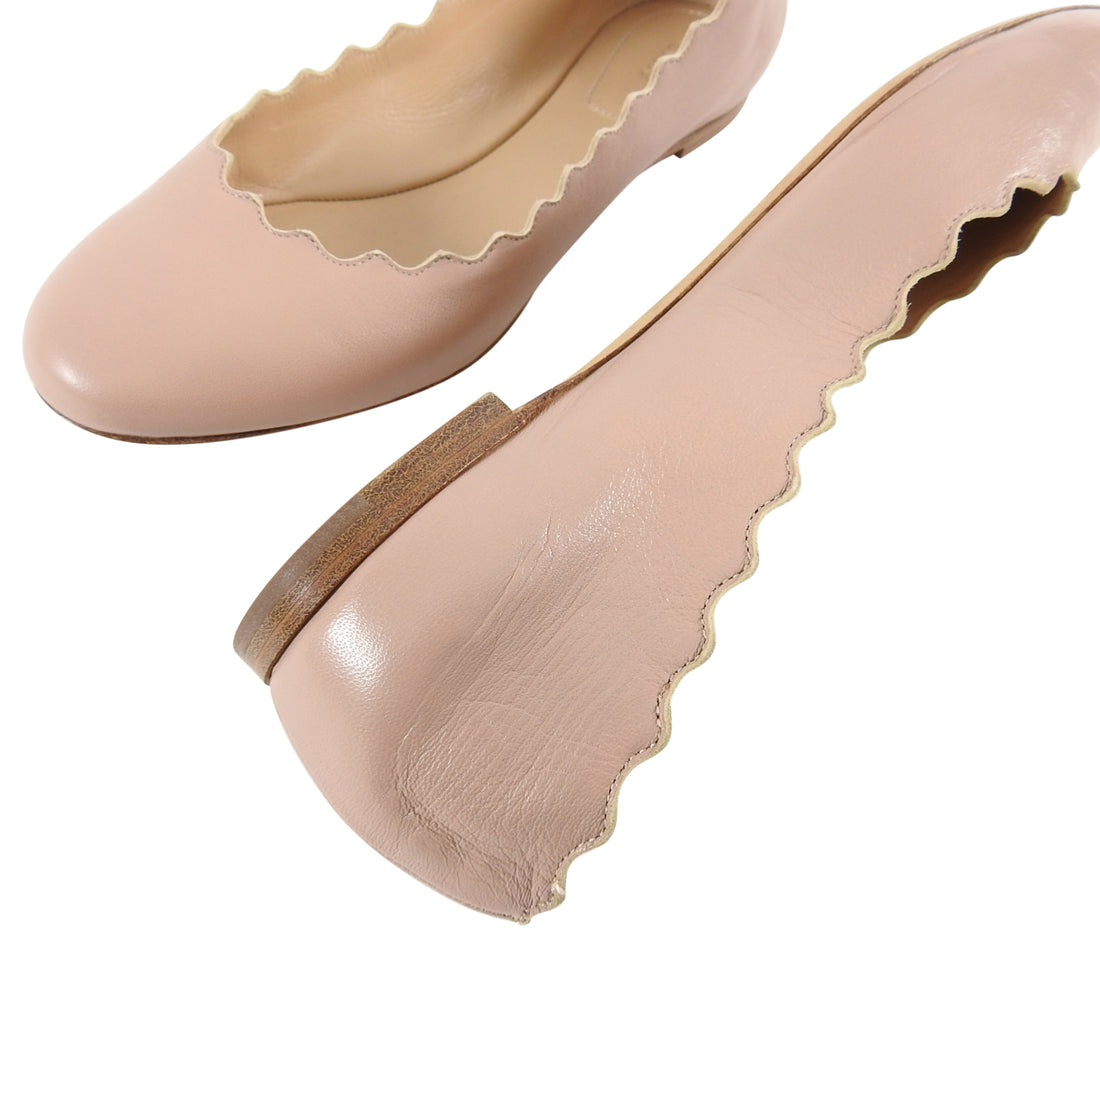 Chloe Lauren Scalloped Leather Nude Ballet Flat Shoes - 36.5 / 6.5